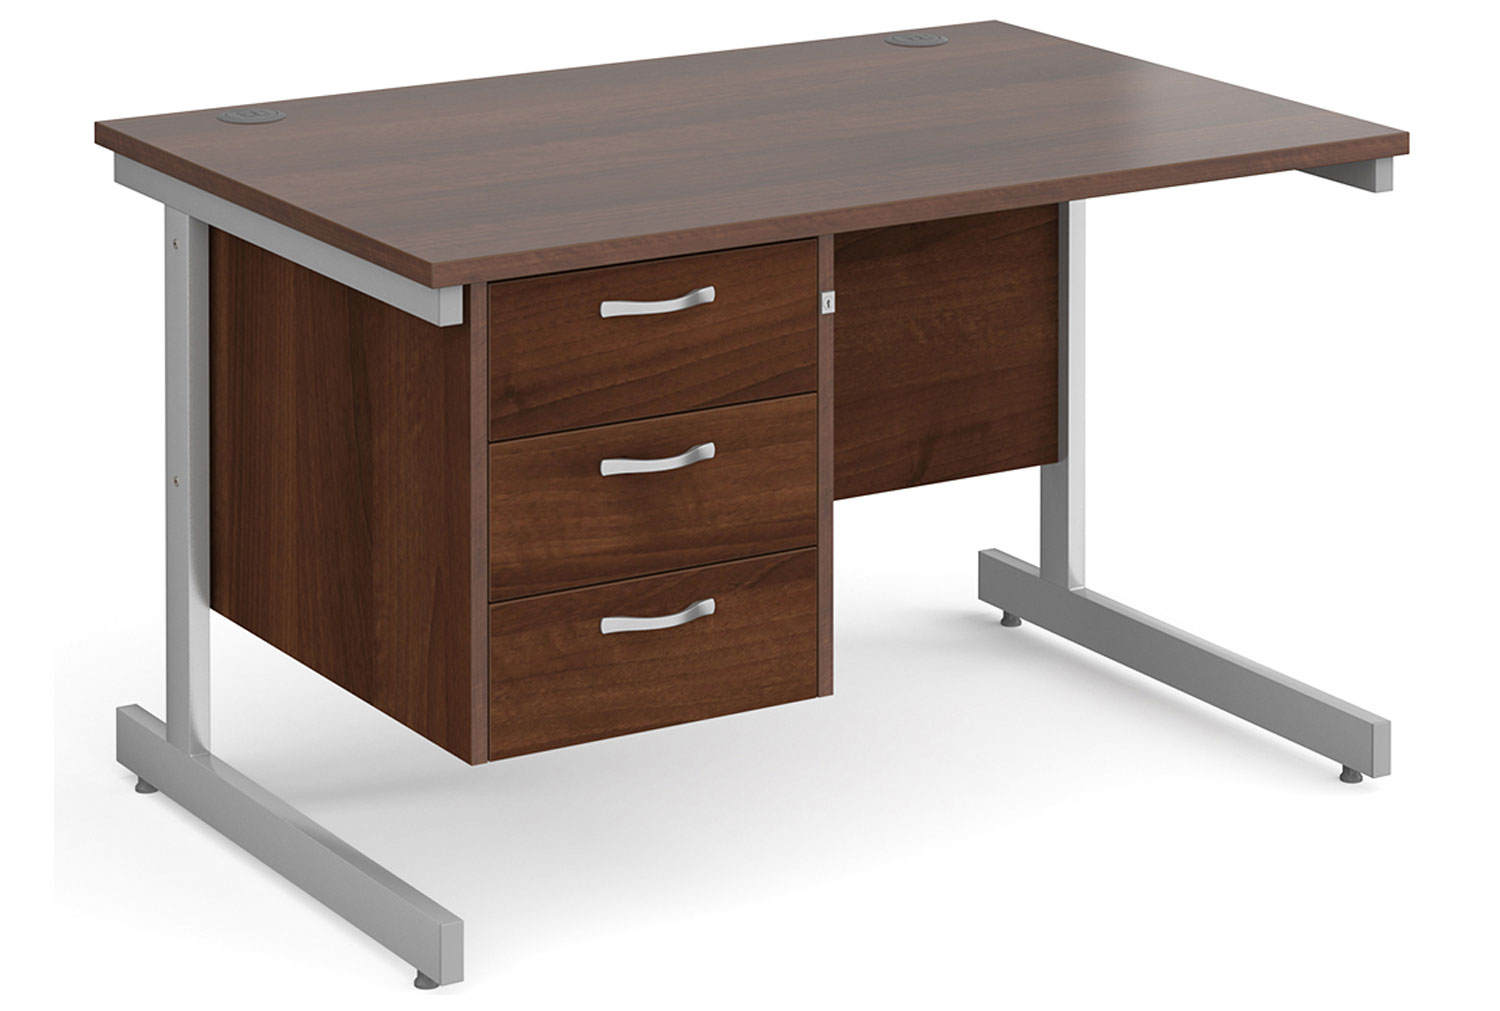 All Walnut C-Leg Clerical Office Desk 3 Drawer, 120wx80dx73h (cm)